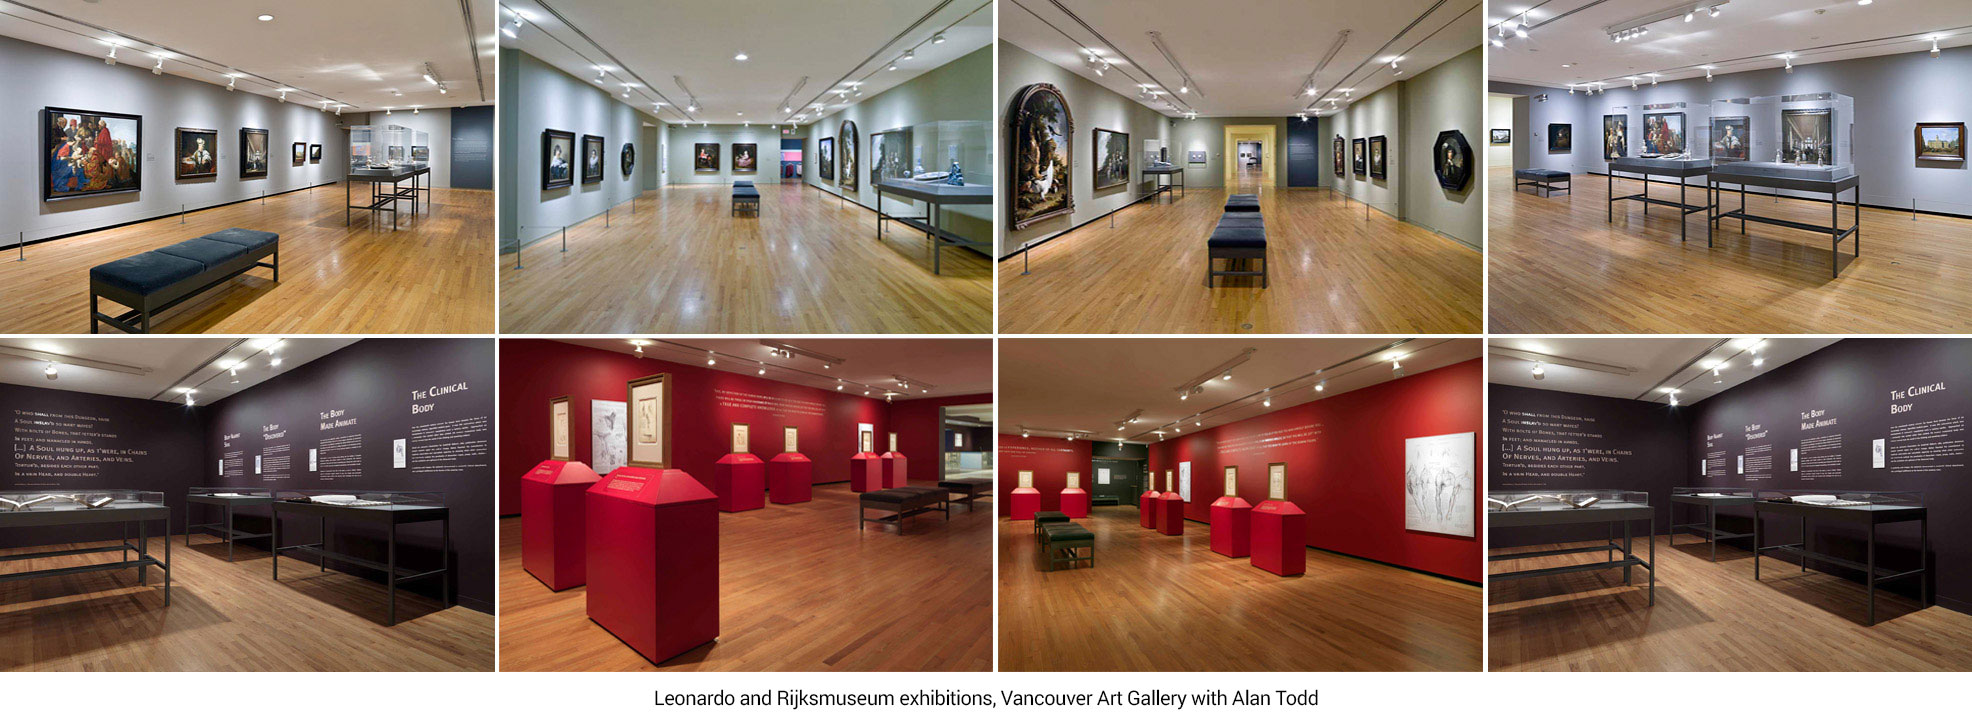 Leonardo and Rijksmuseum exhibitions, Vancouver Art Gallery